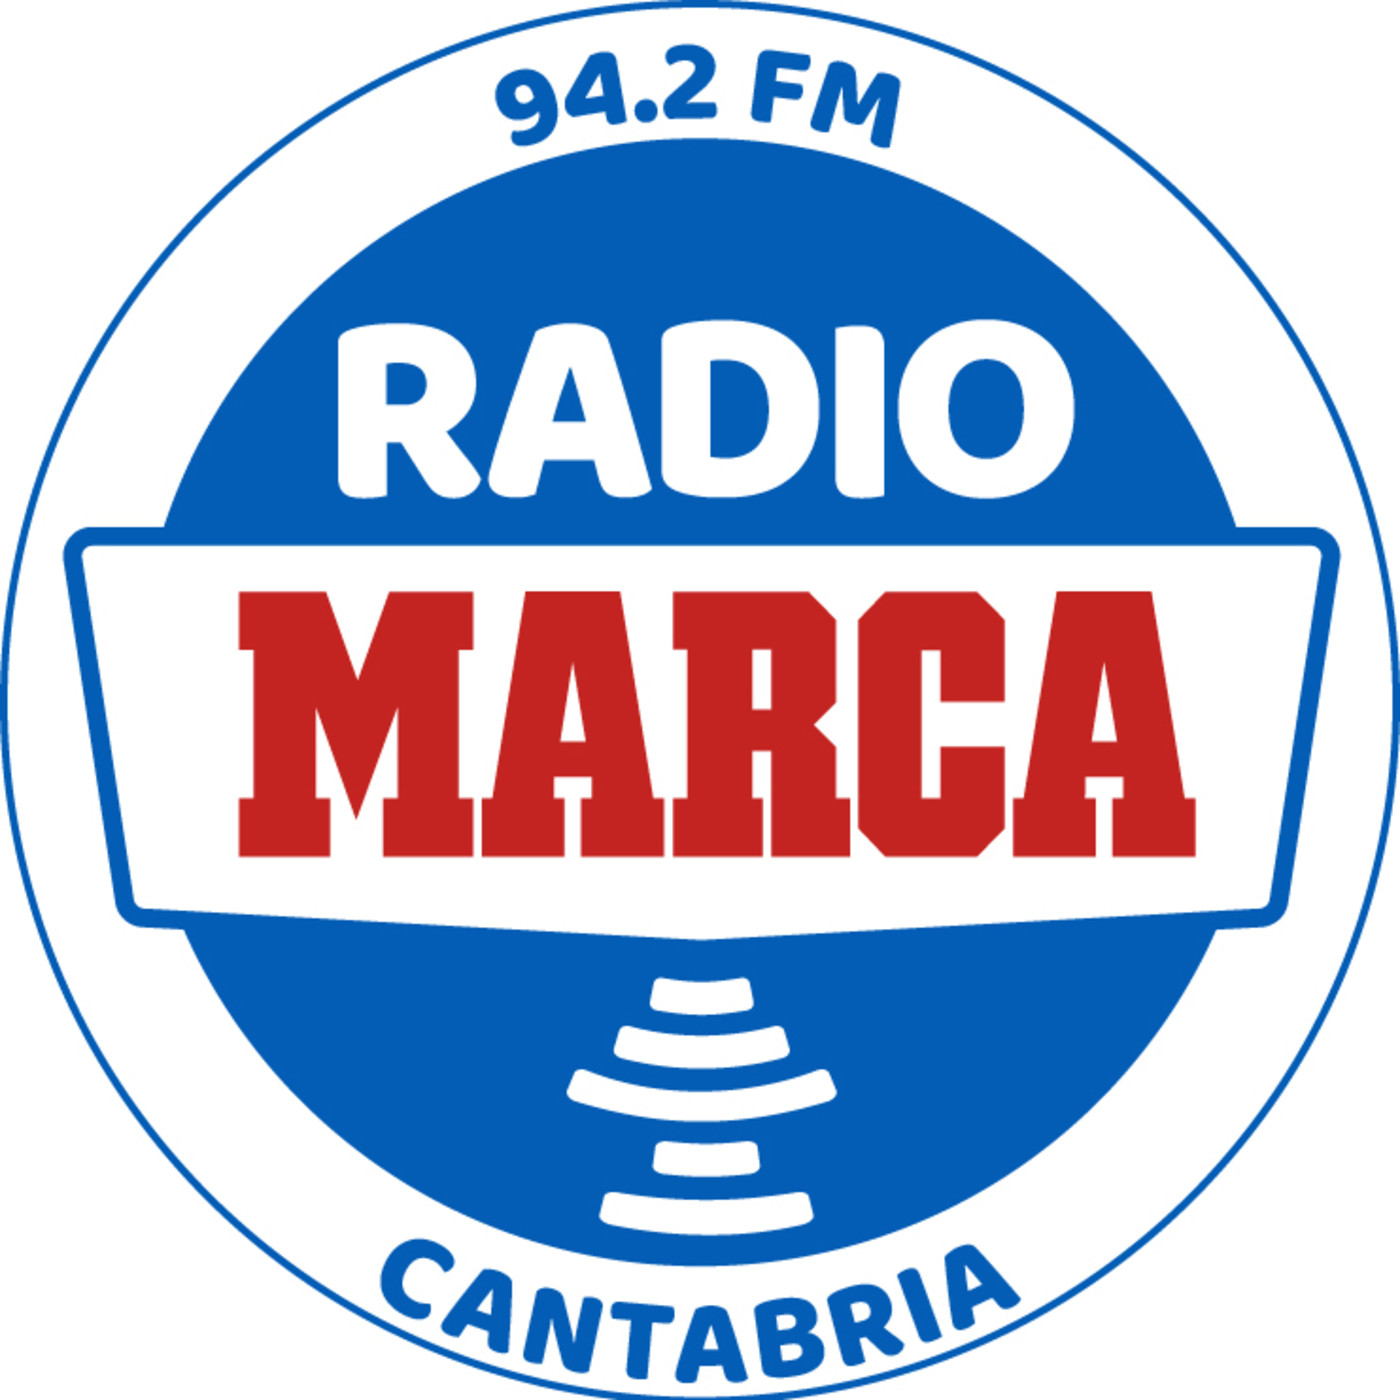 RadioMarca Cantabria2018